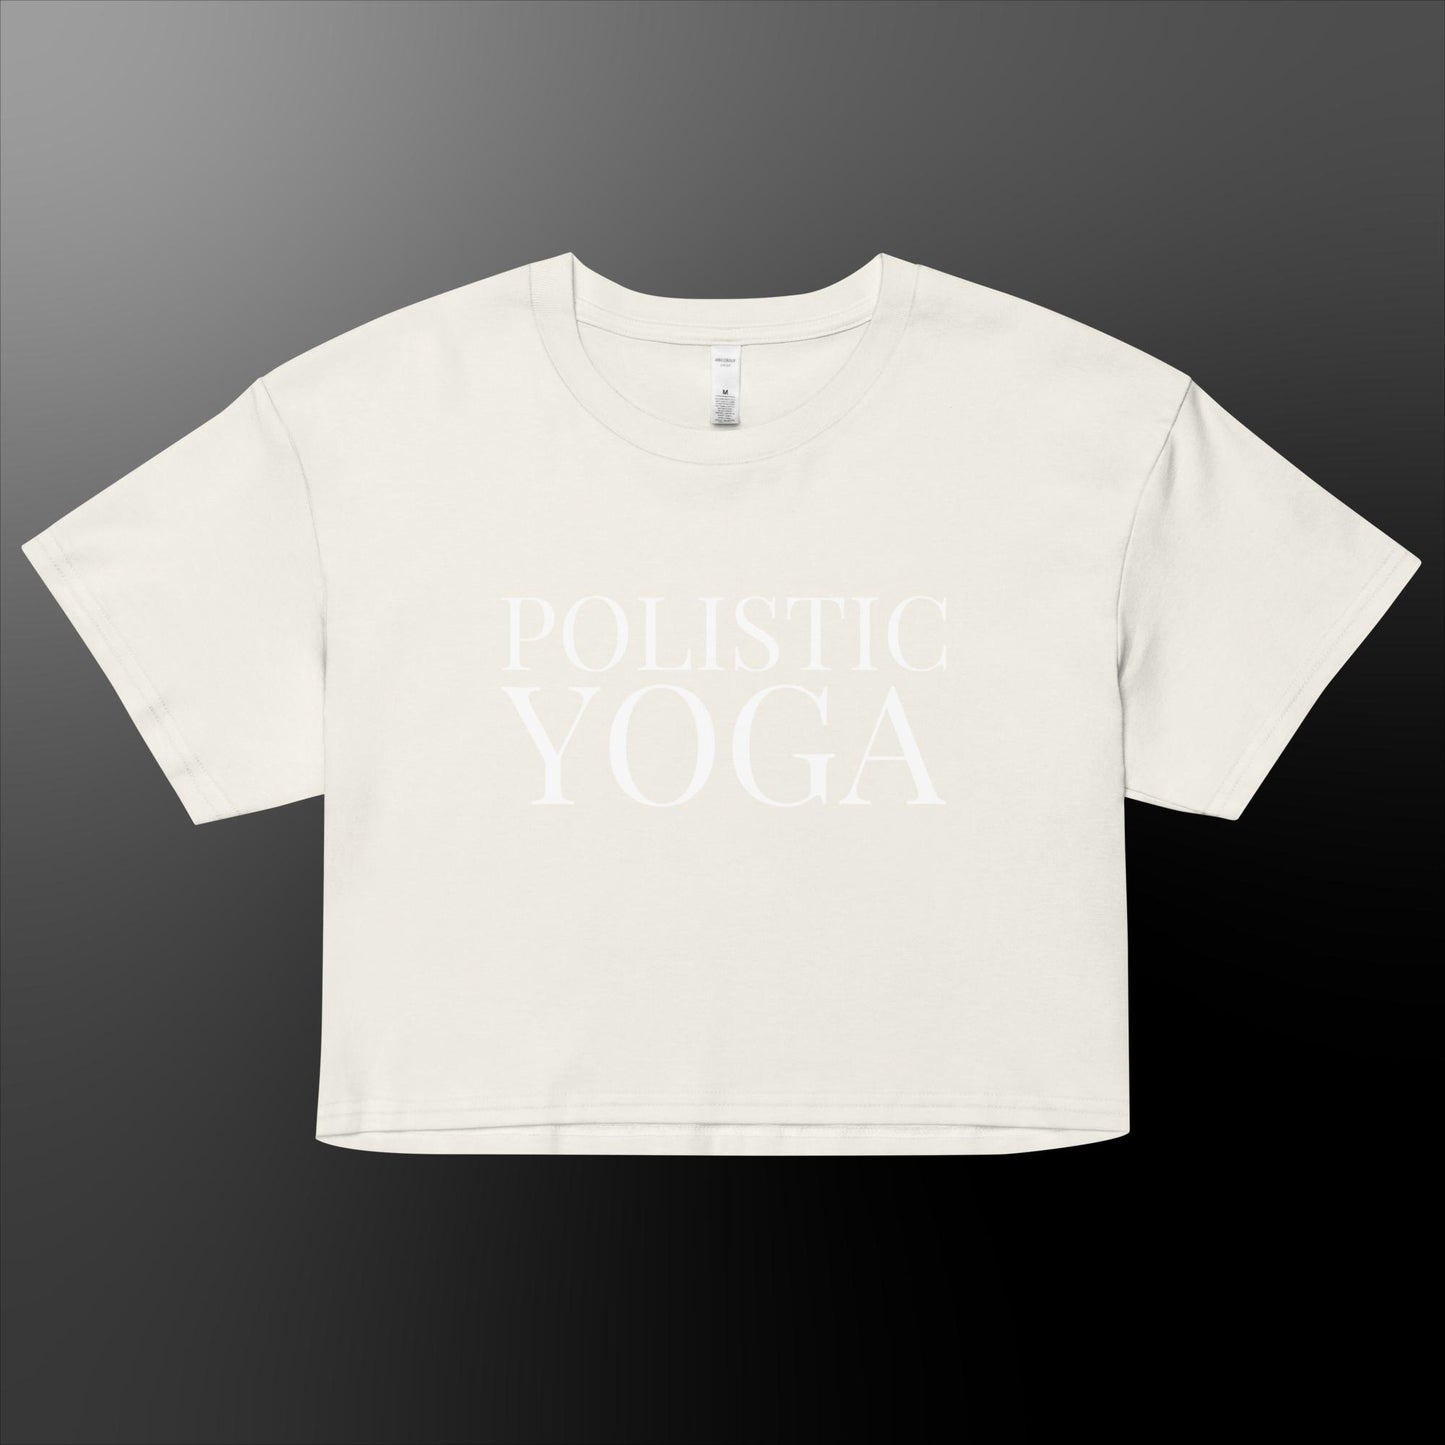 Women’s Polistic Yoga crop top T Shirt